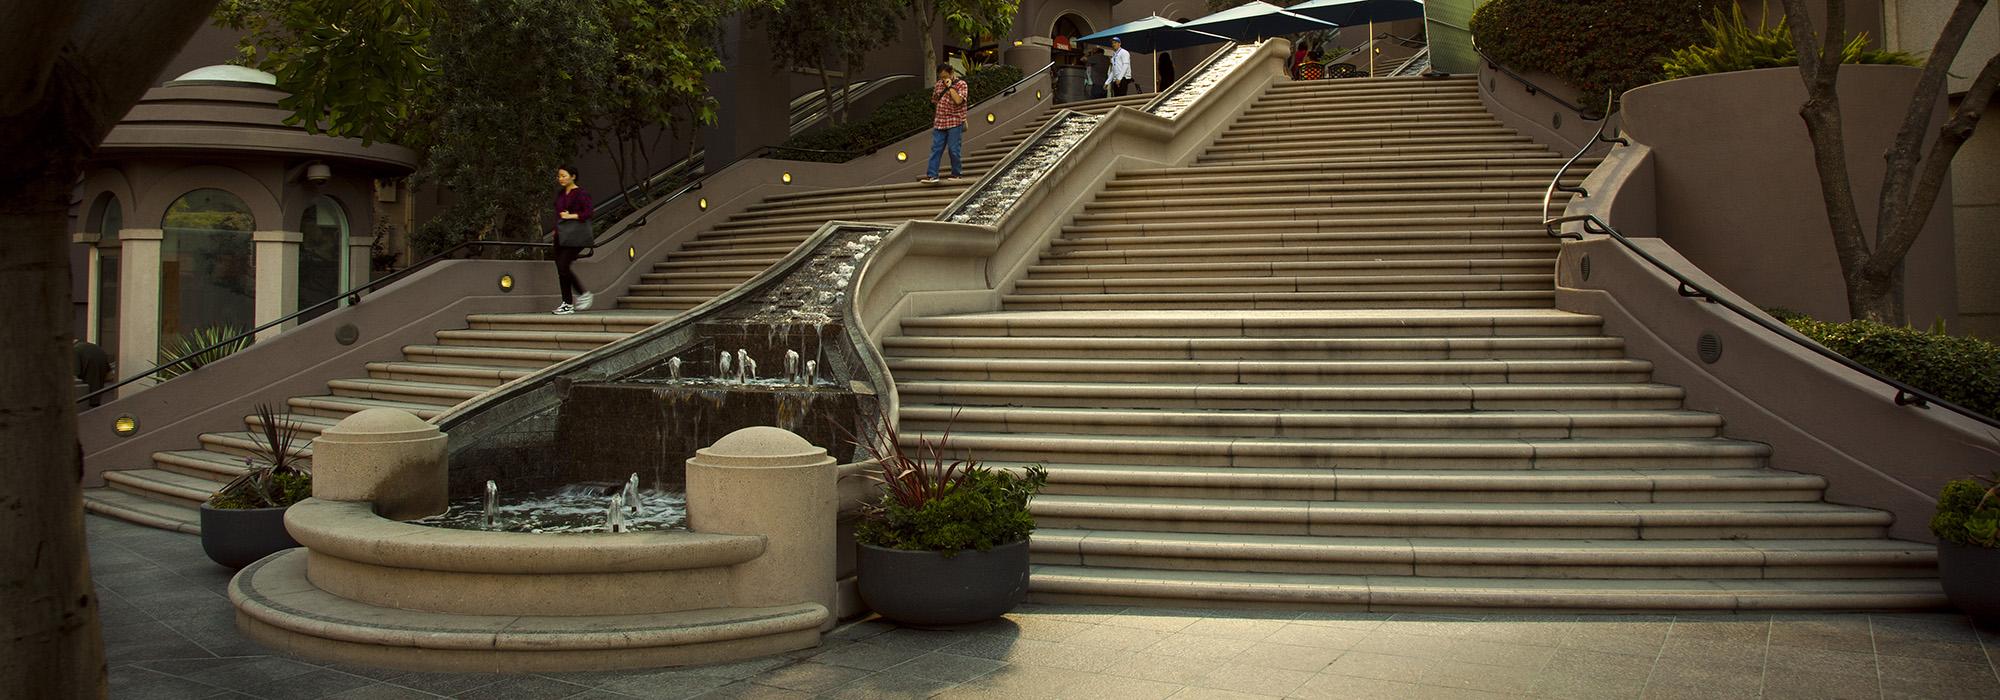 Bunker Hill Steps, Los Angeles, CA